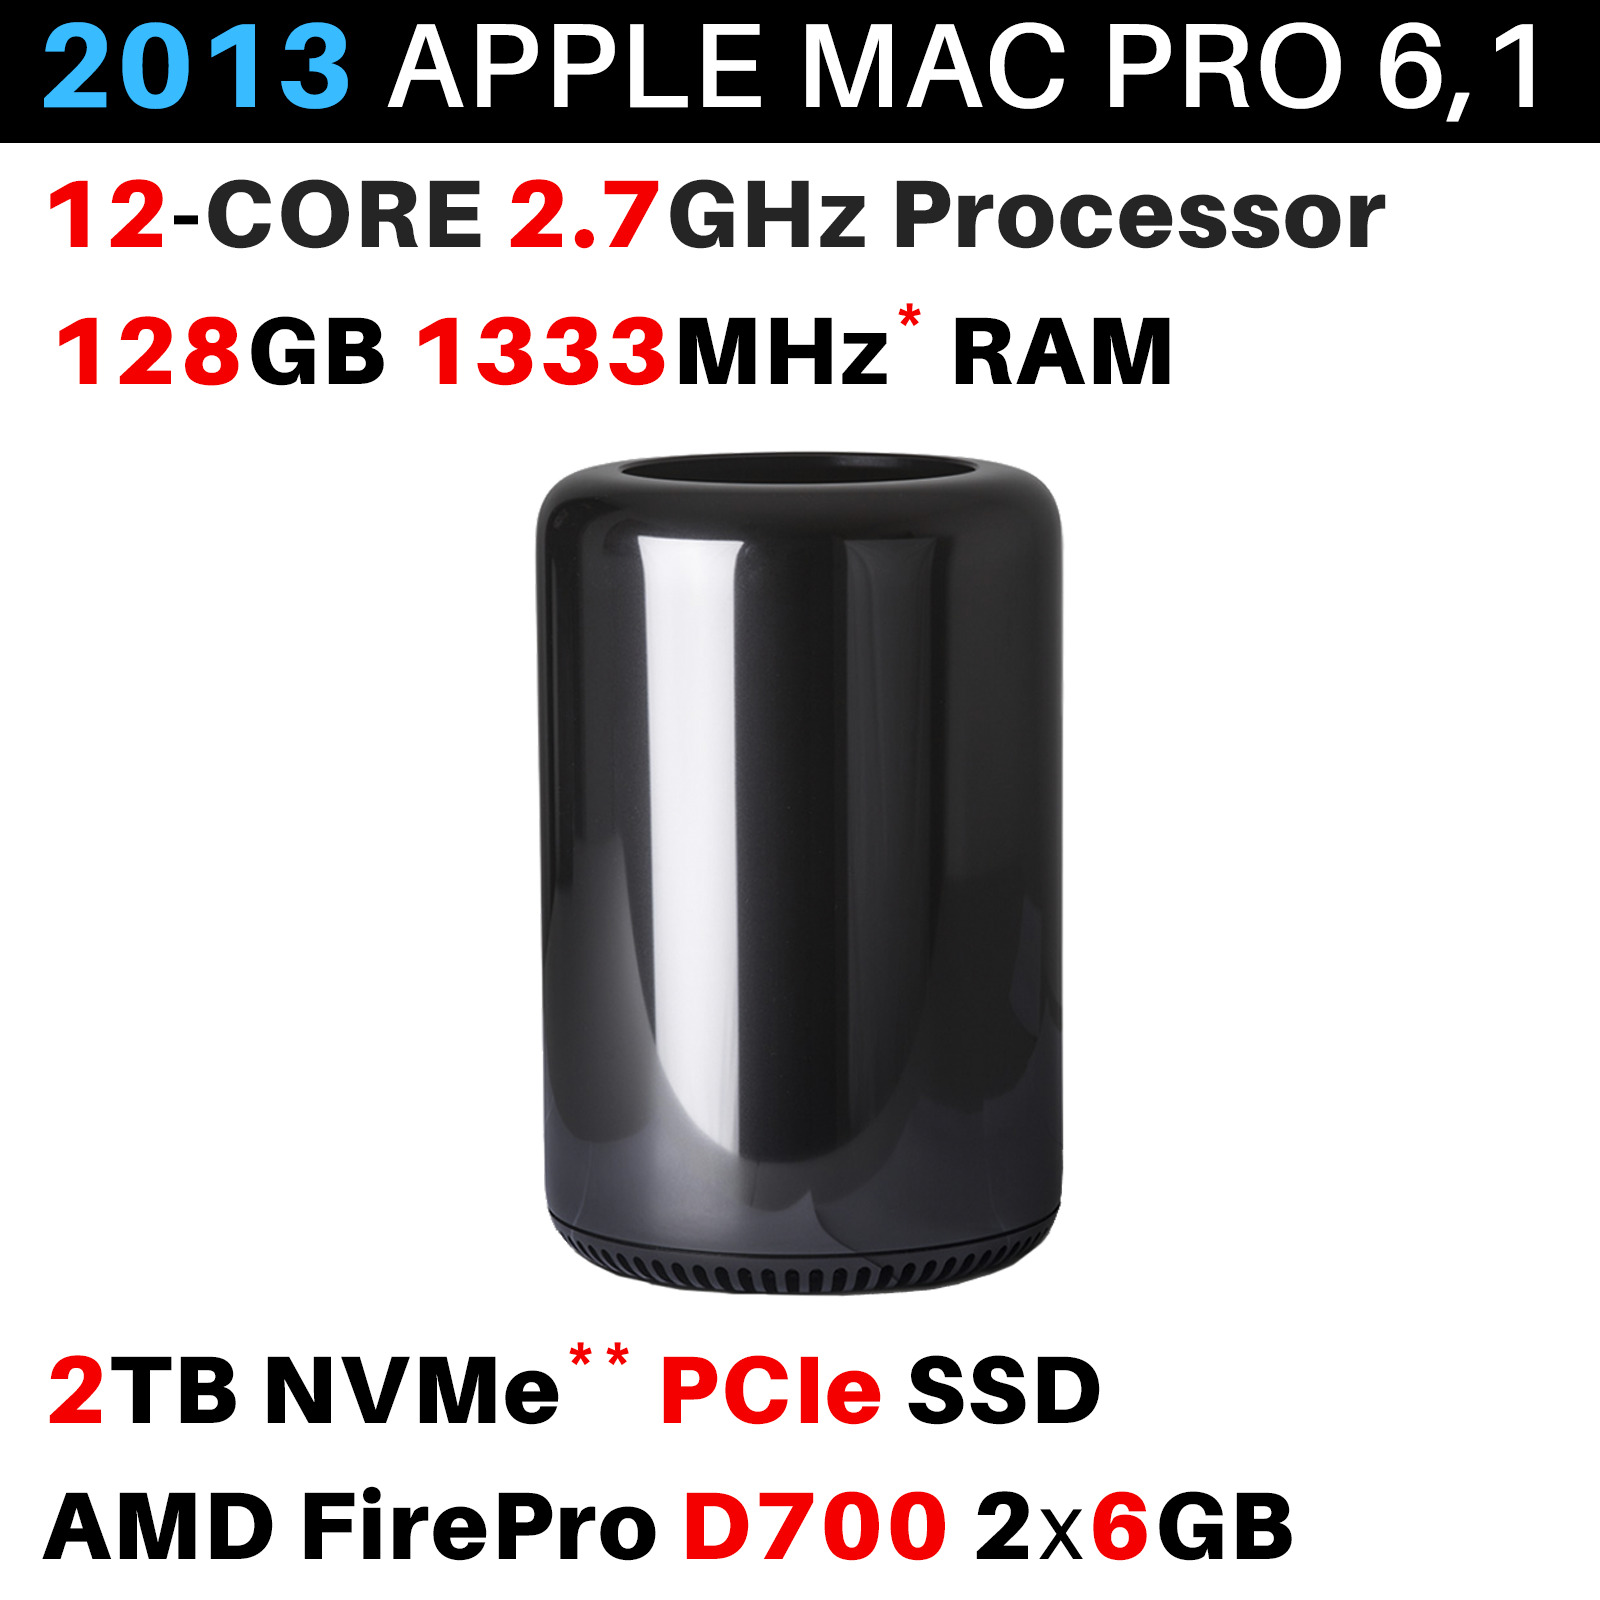 2013 Apple Mac Pro 2.7GHz 12-core / 128GB / 2TB / FirePro D700 2x 6GB - BTO/CTO